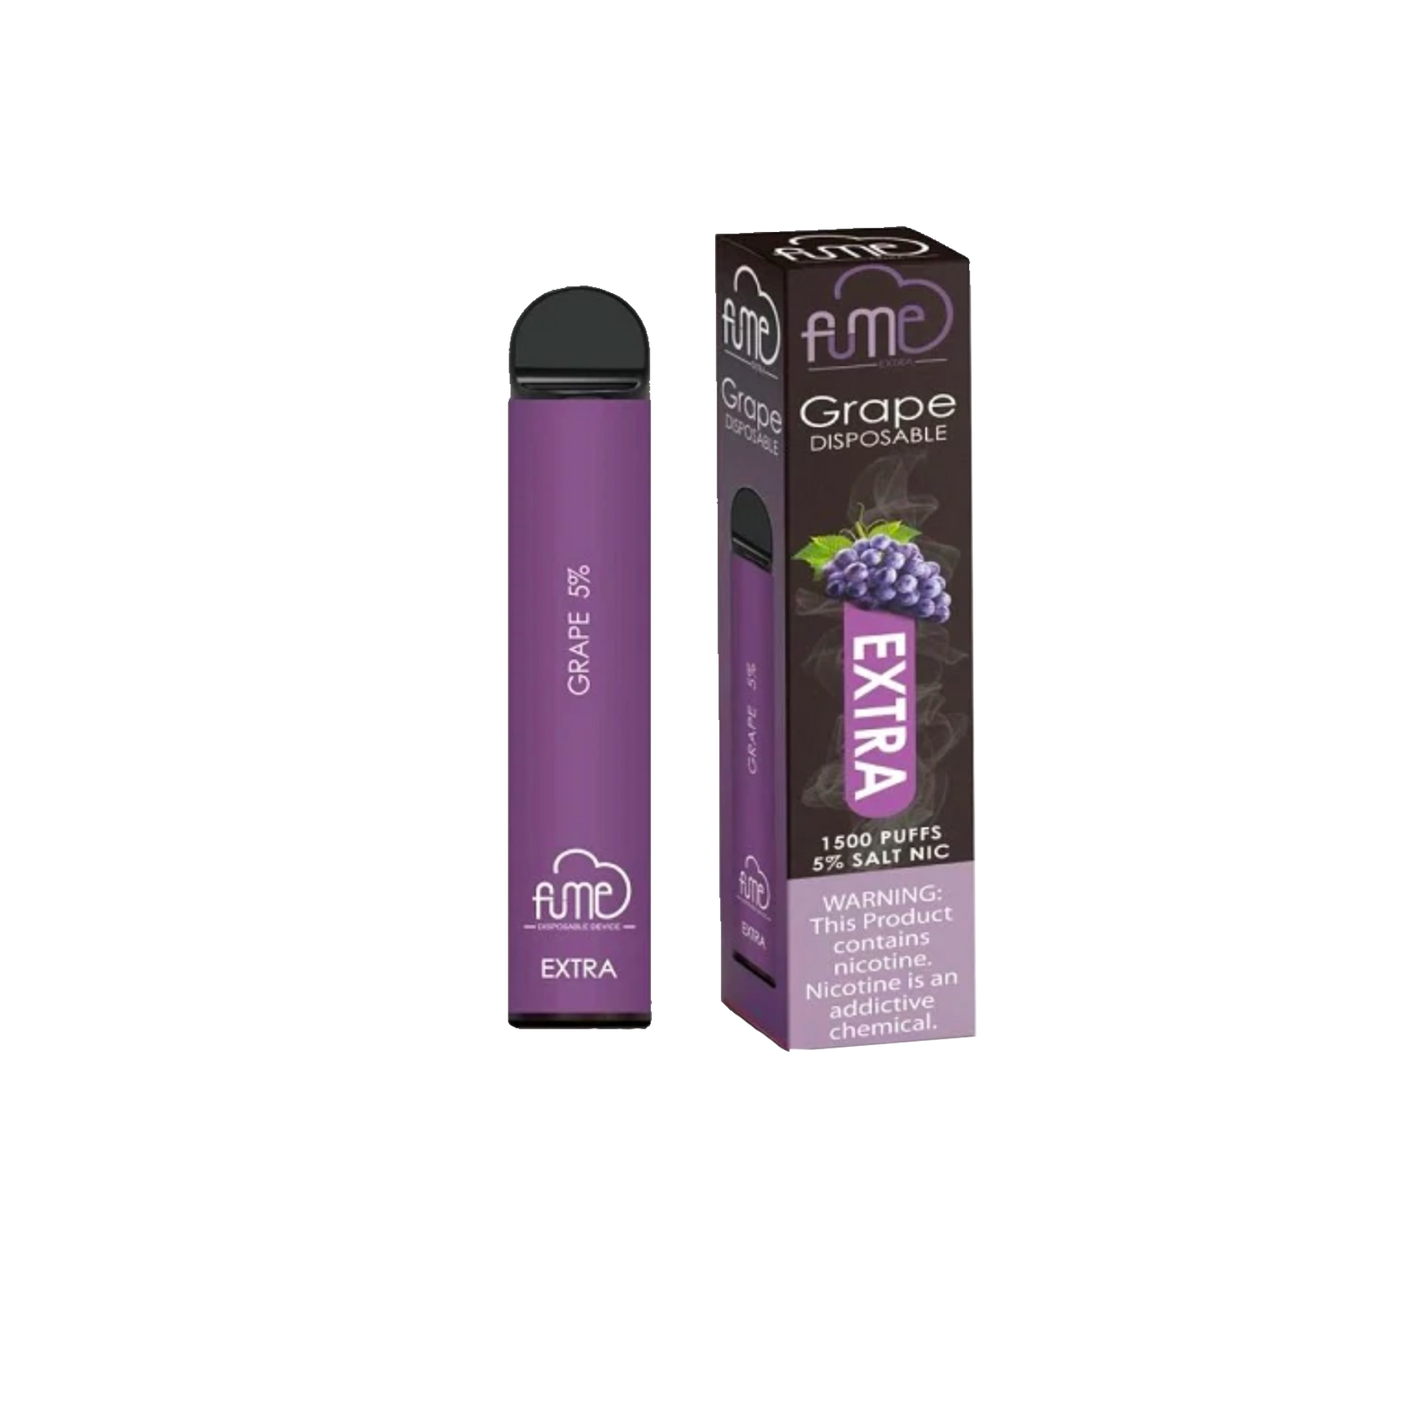 FUME Extra 1500 Puff Grape Disposable Vape